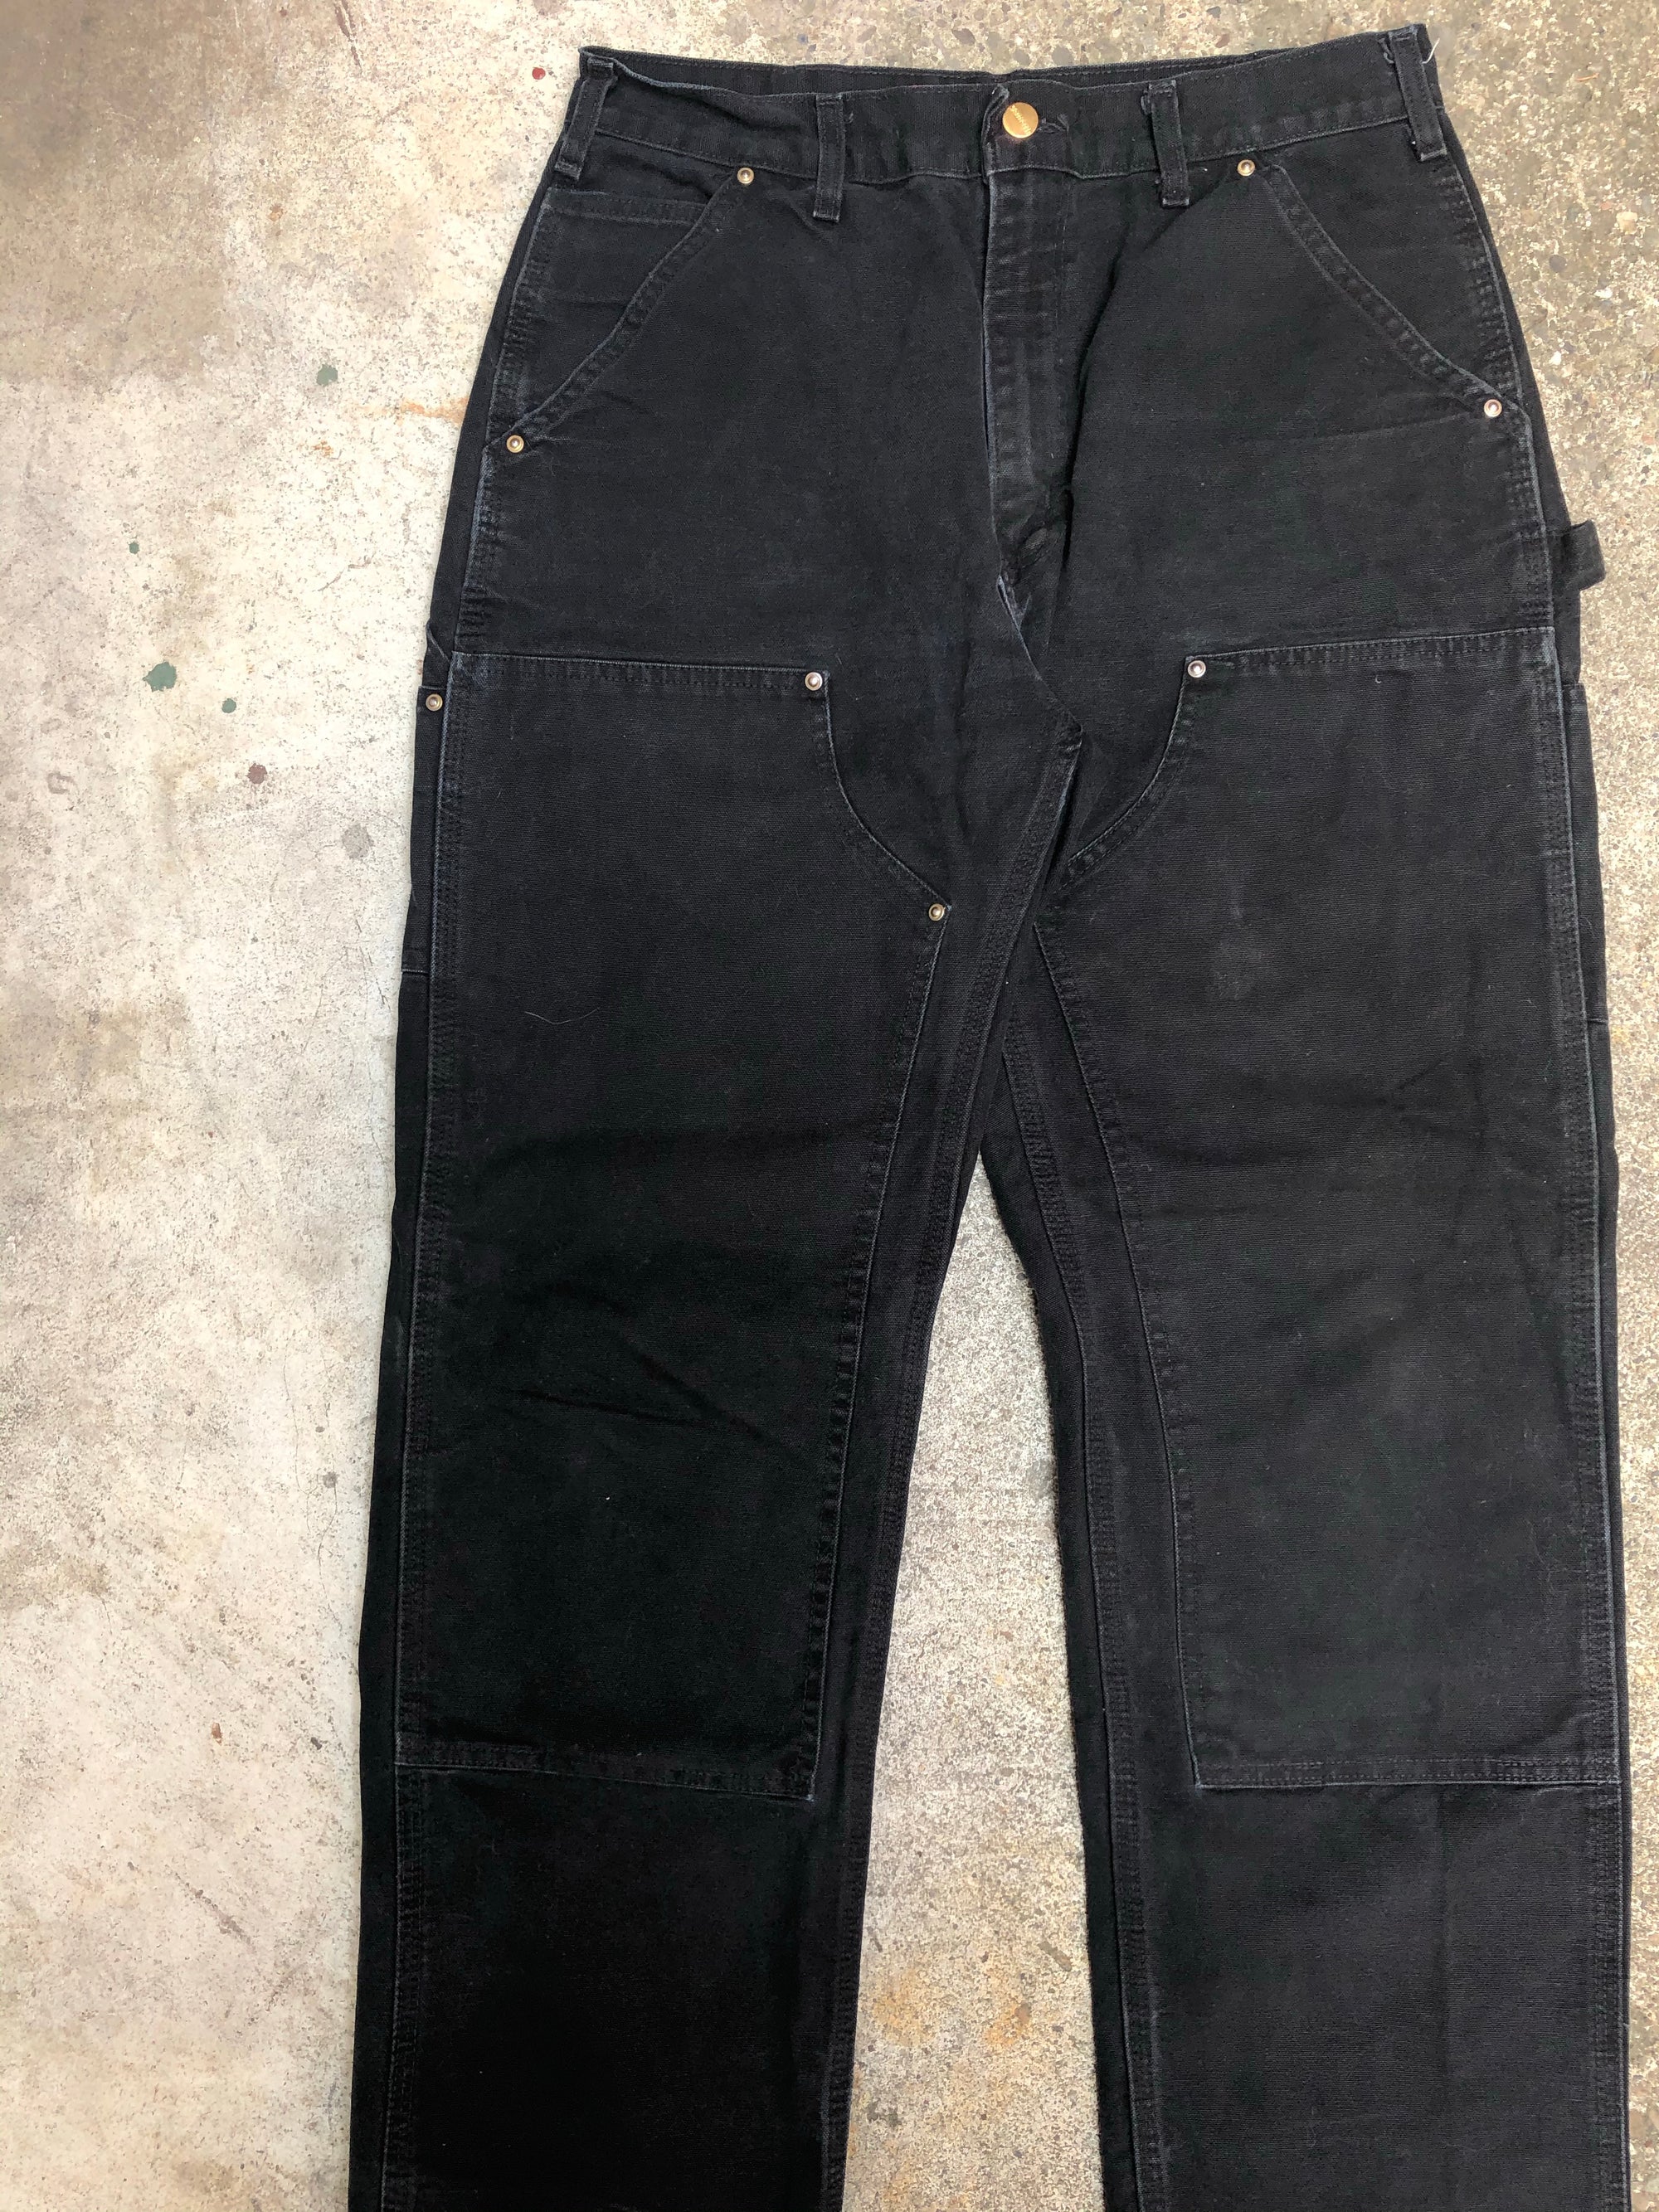 Carhartt B01 Black Double Front Knee Work Pants (32X31)